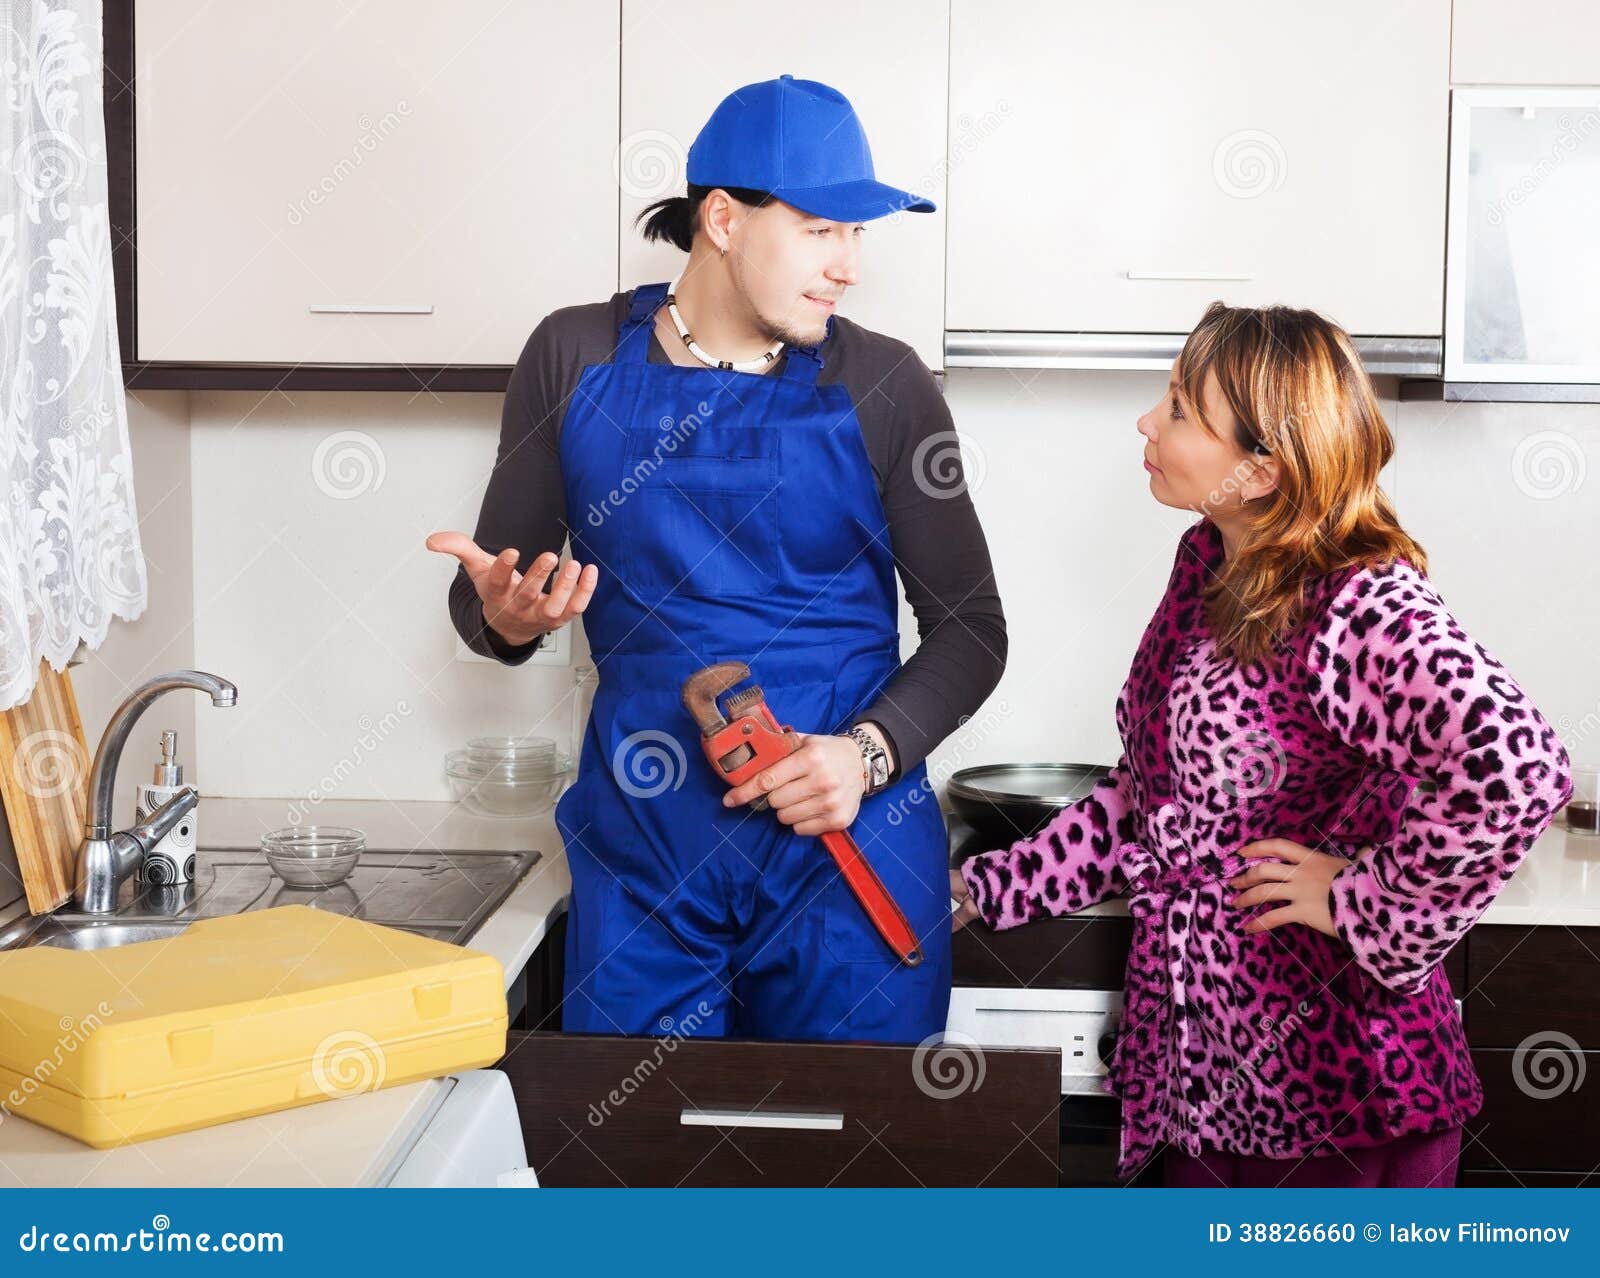 housewife flashes repair man